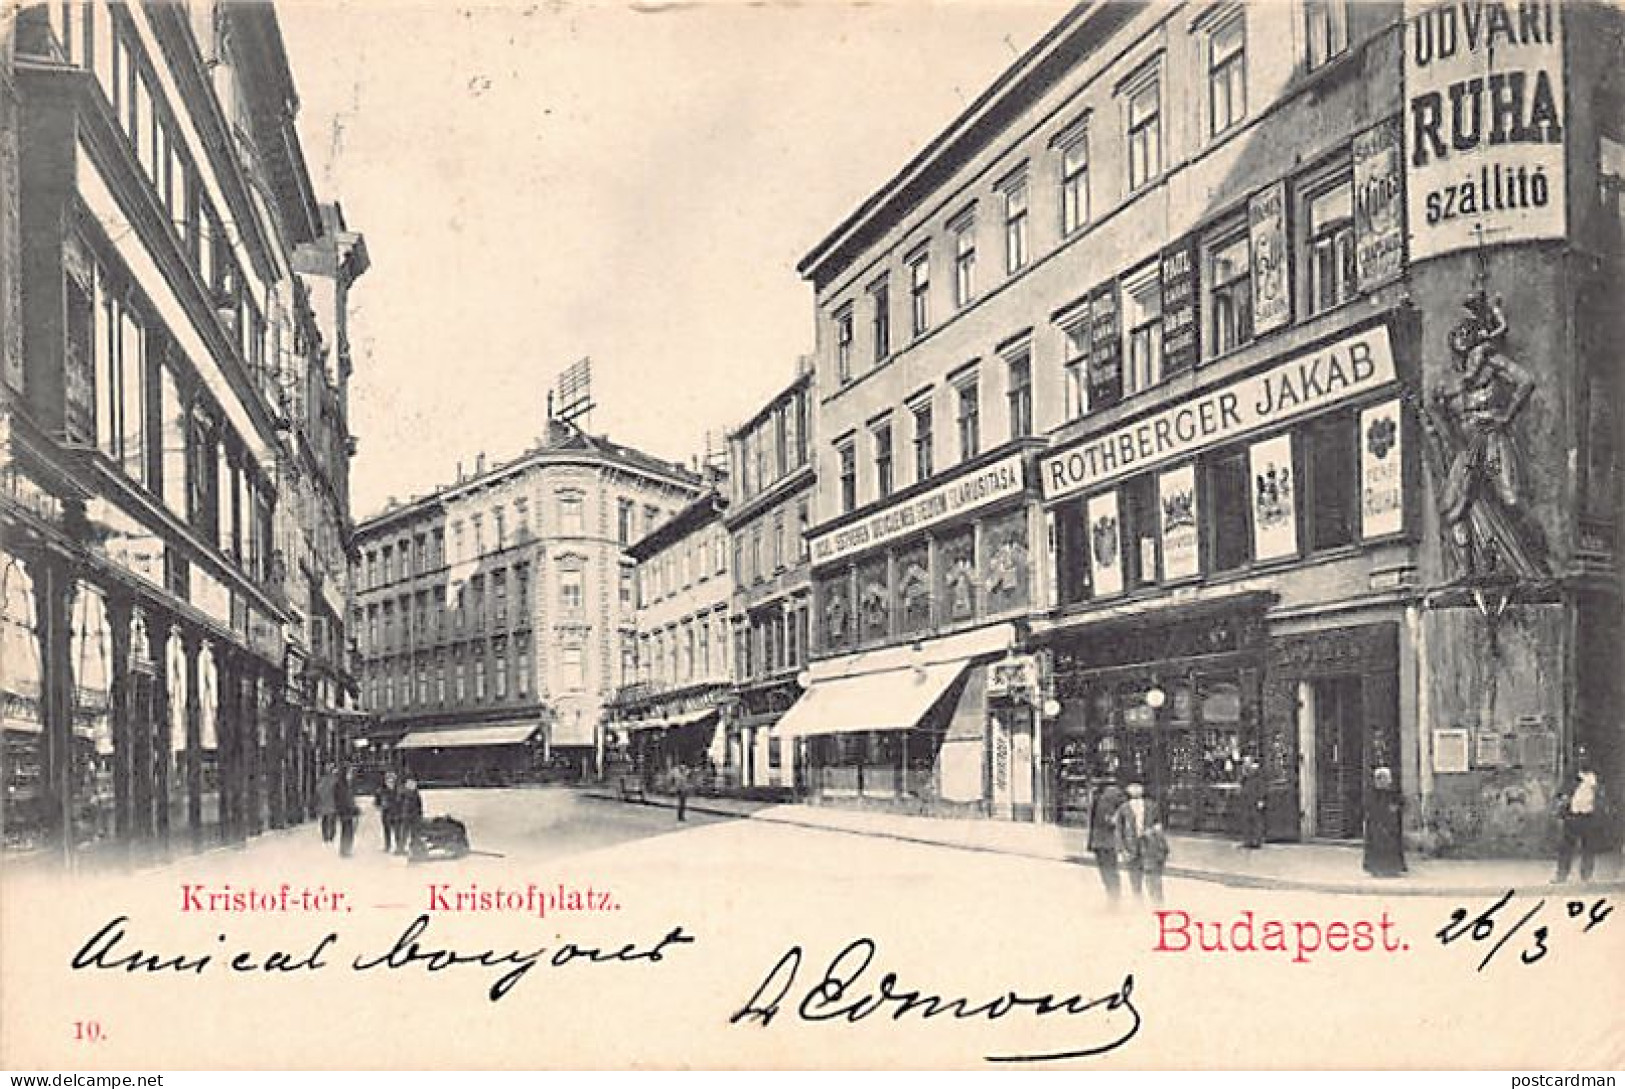 Hungary - BUDAPEST - Rothberger Jakab Shop - Kristof-tér. - Ungarn